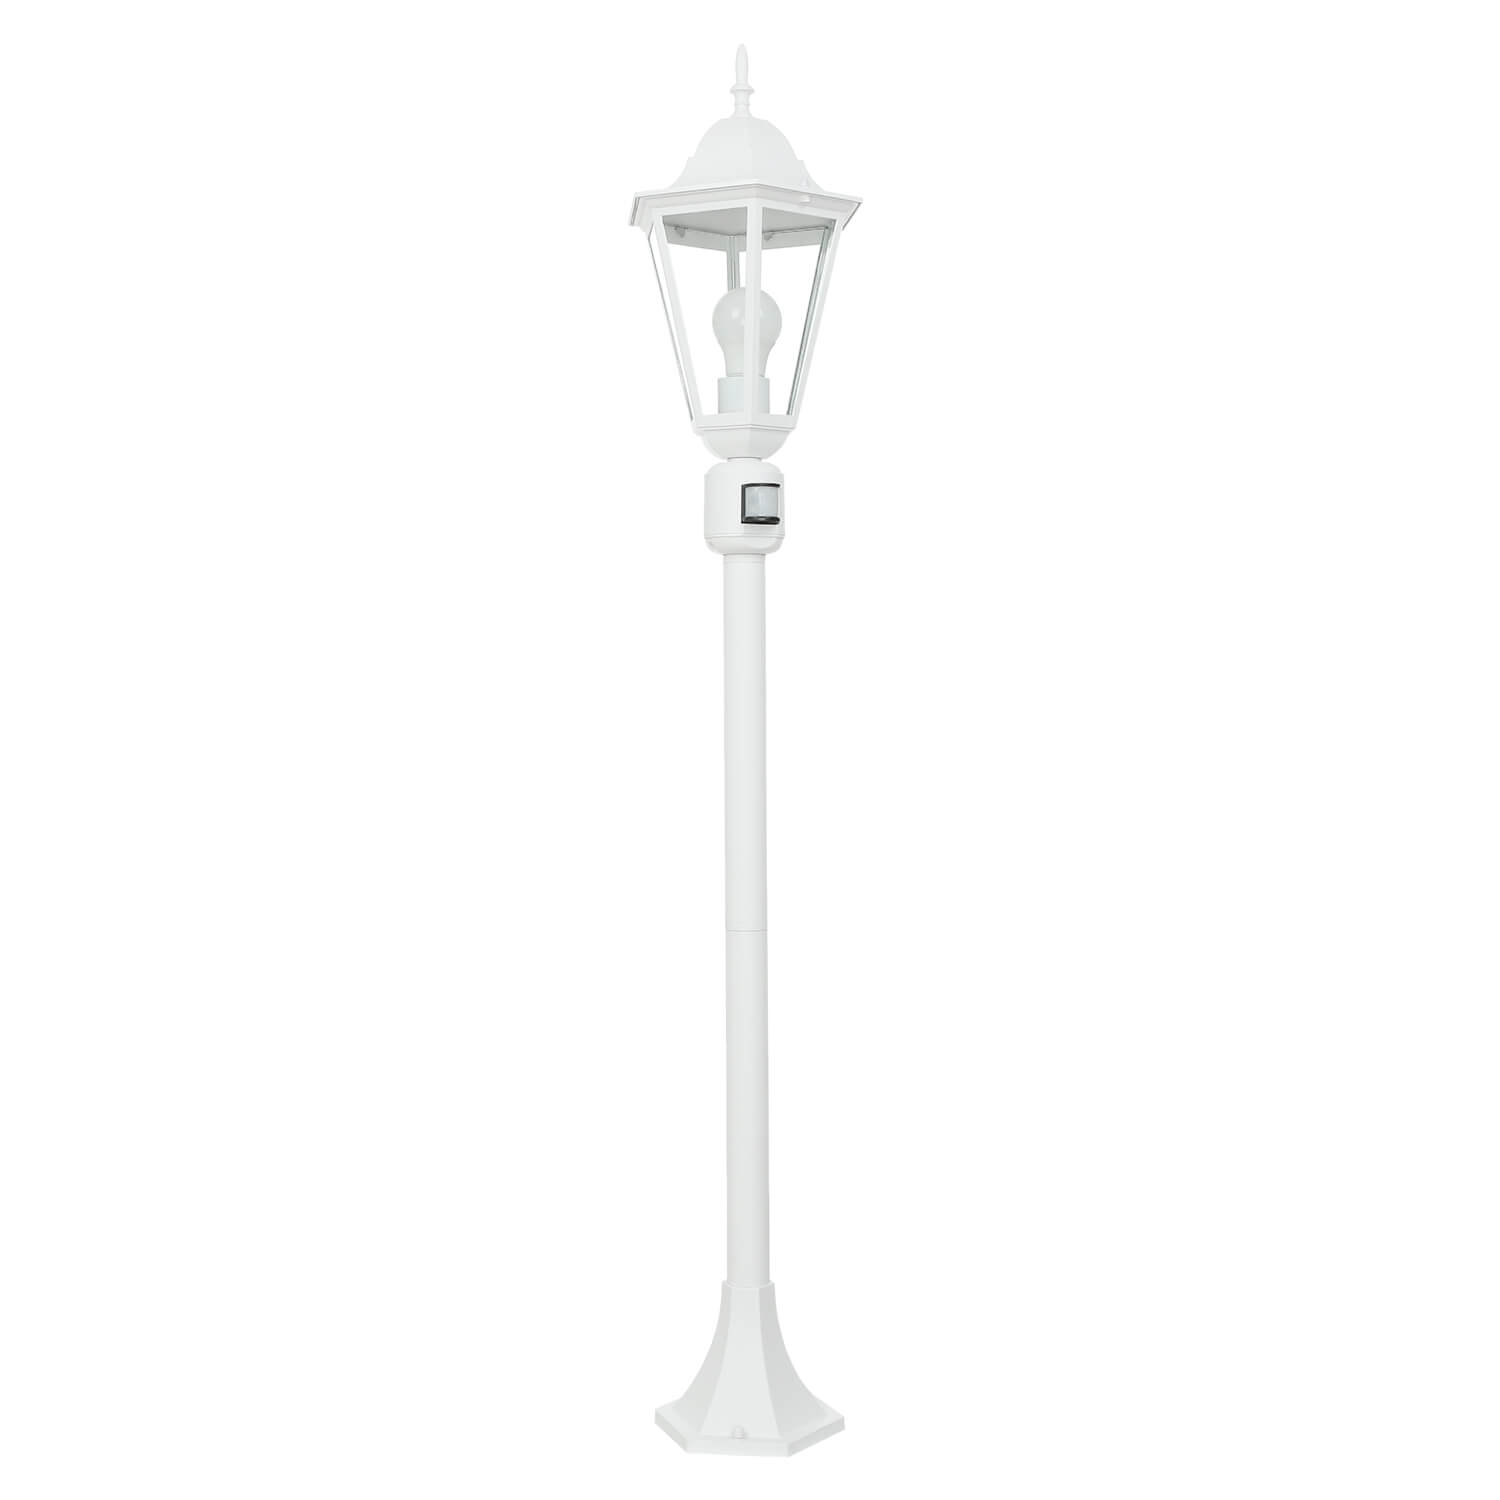 Rustikale Gartenlampe Weiß 120 cm hoch wetterfest